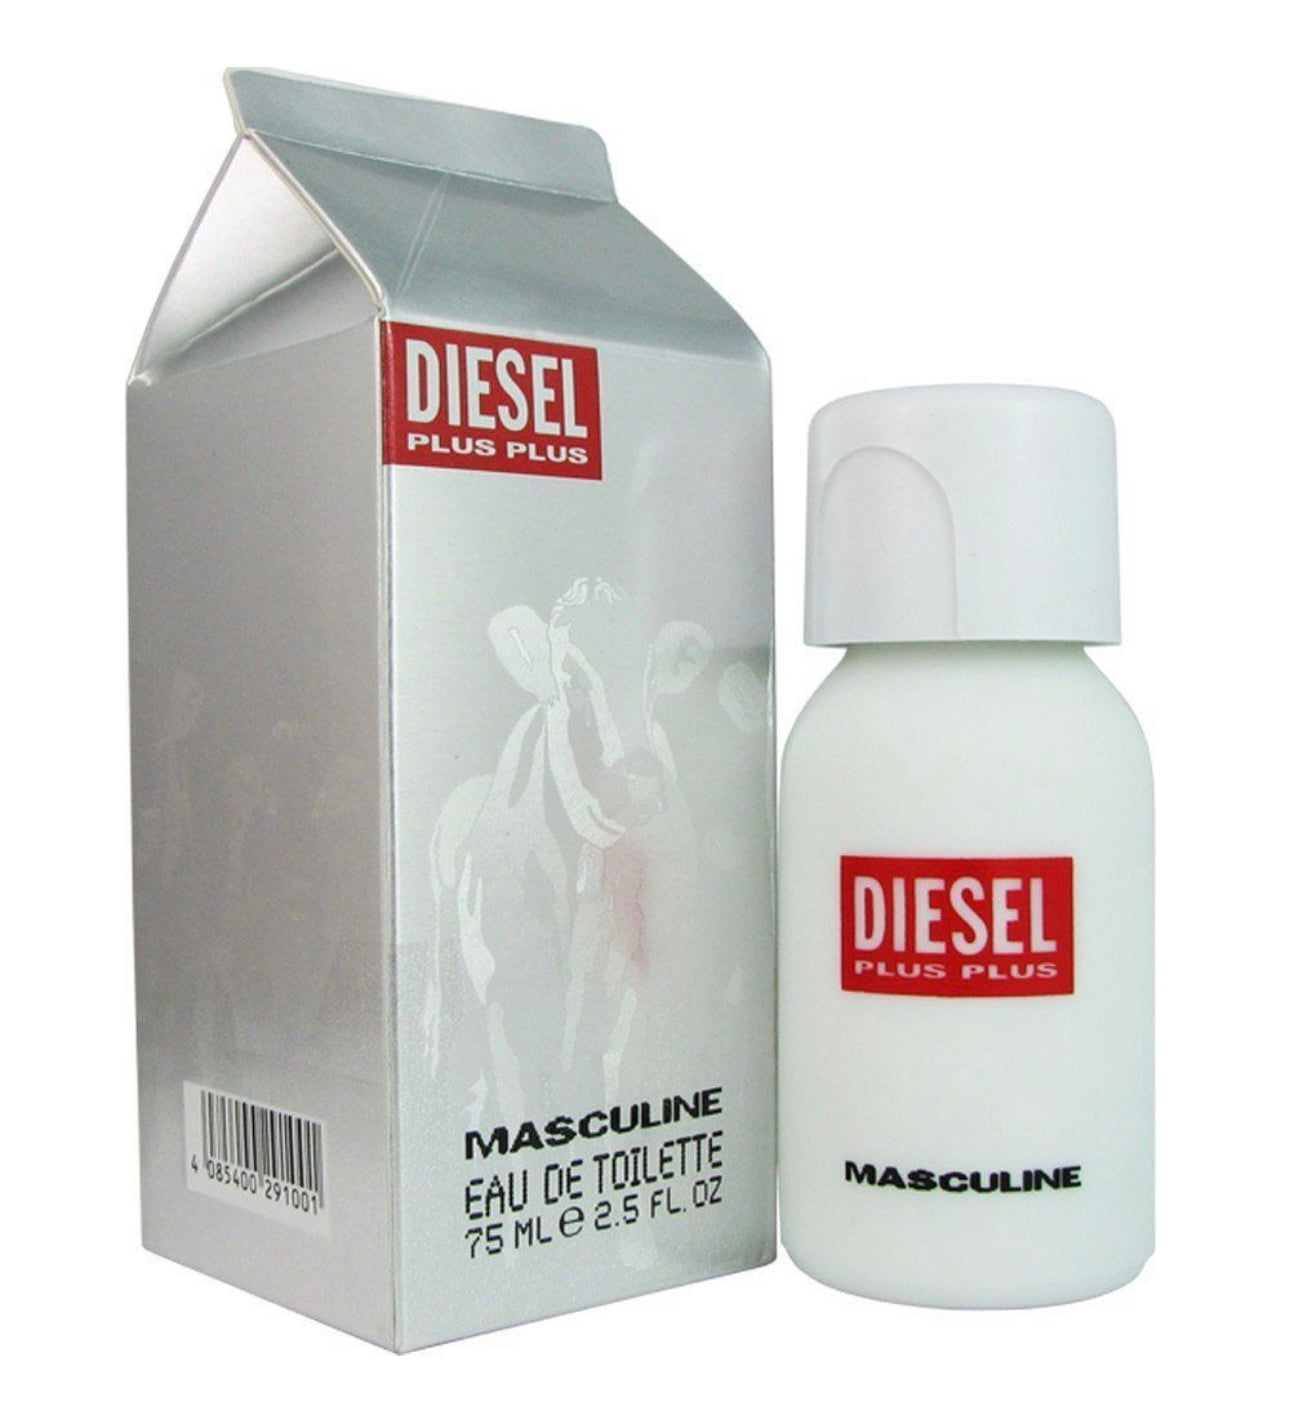 Diesel- Plus Plus- Masculine-EdT